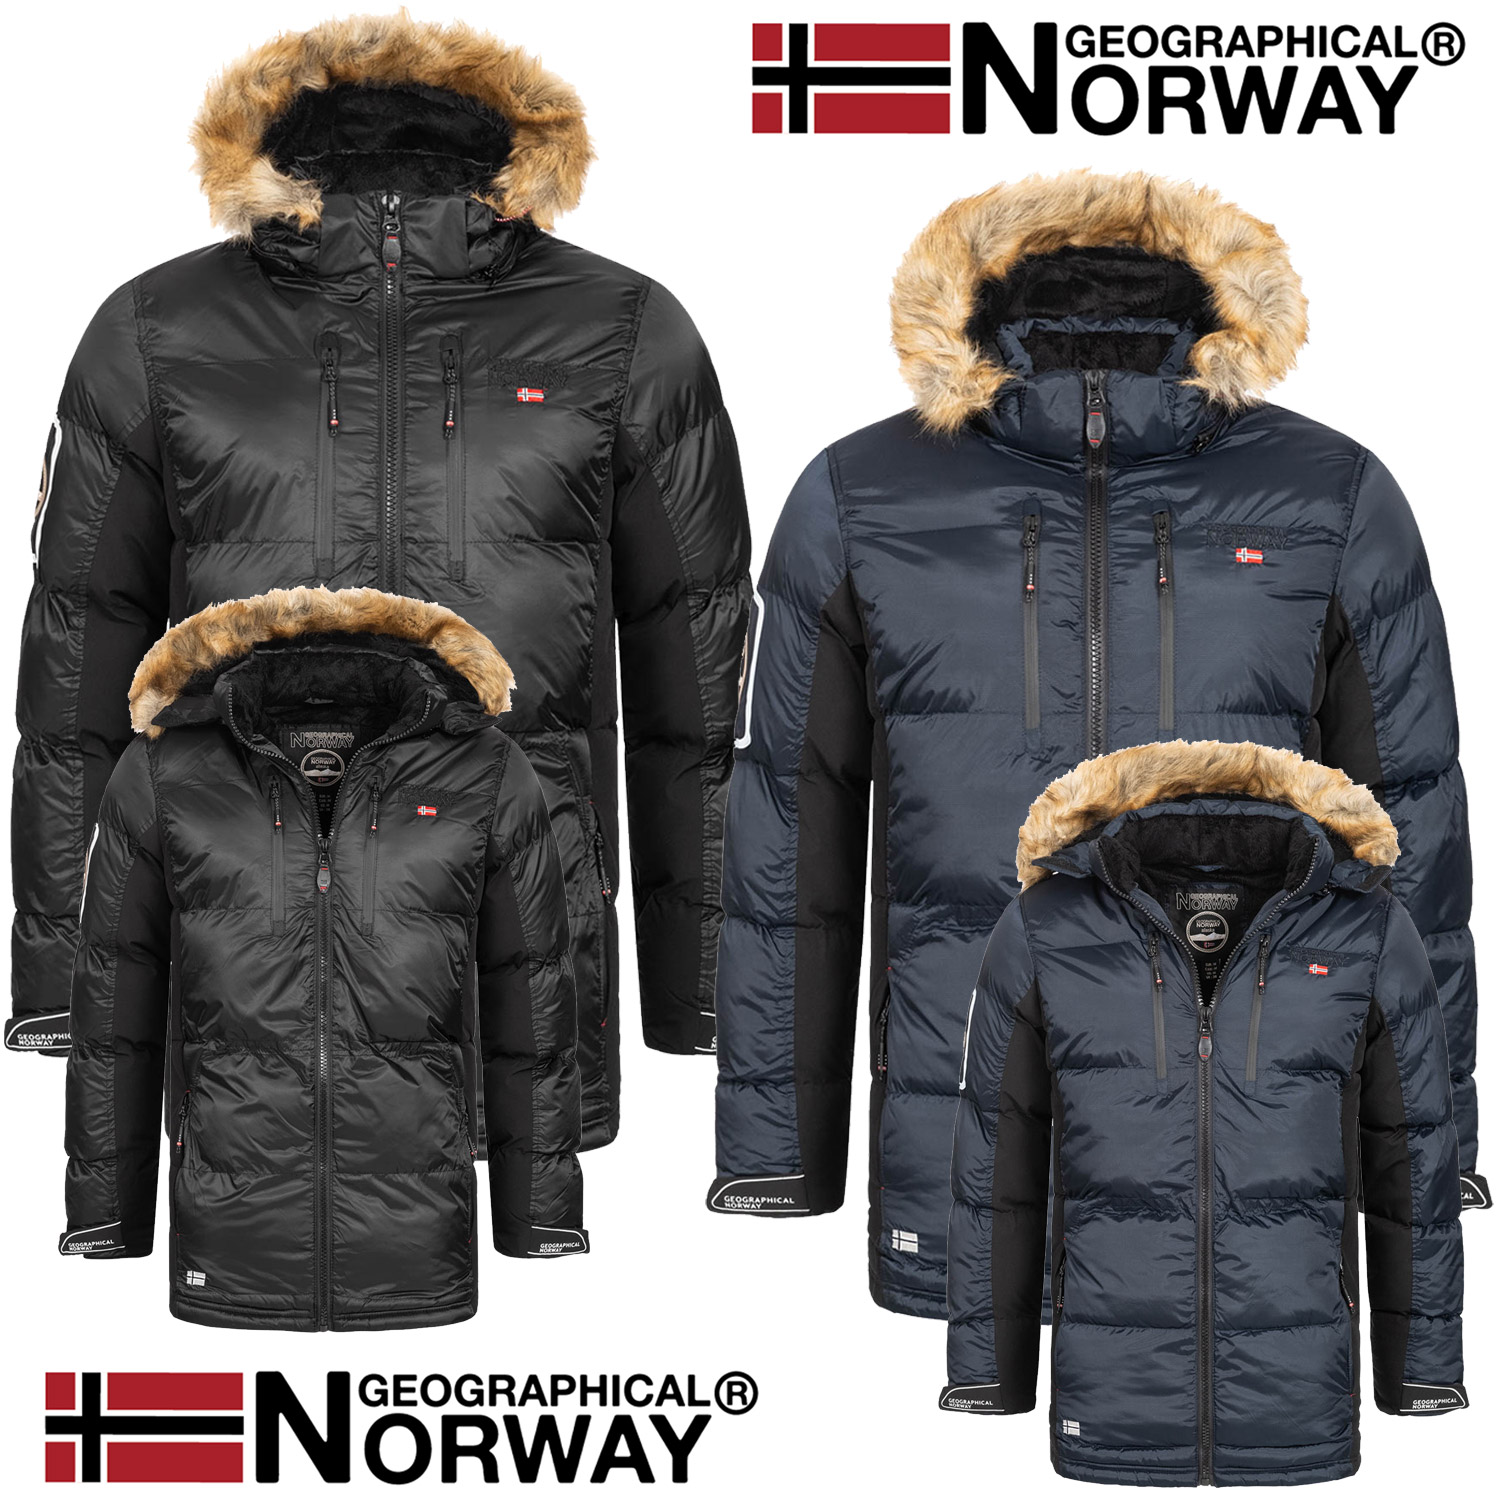 El chubasquero Geographical Norway para hombre de 30 euros